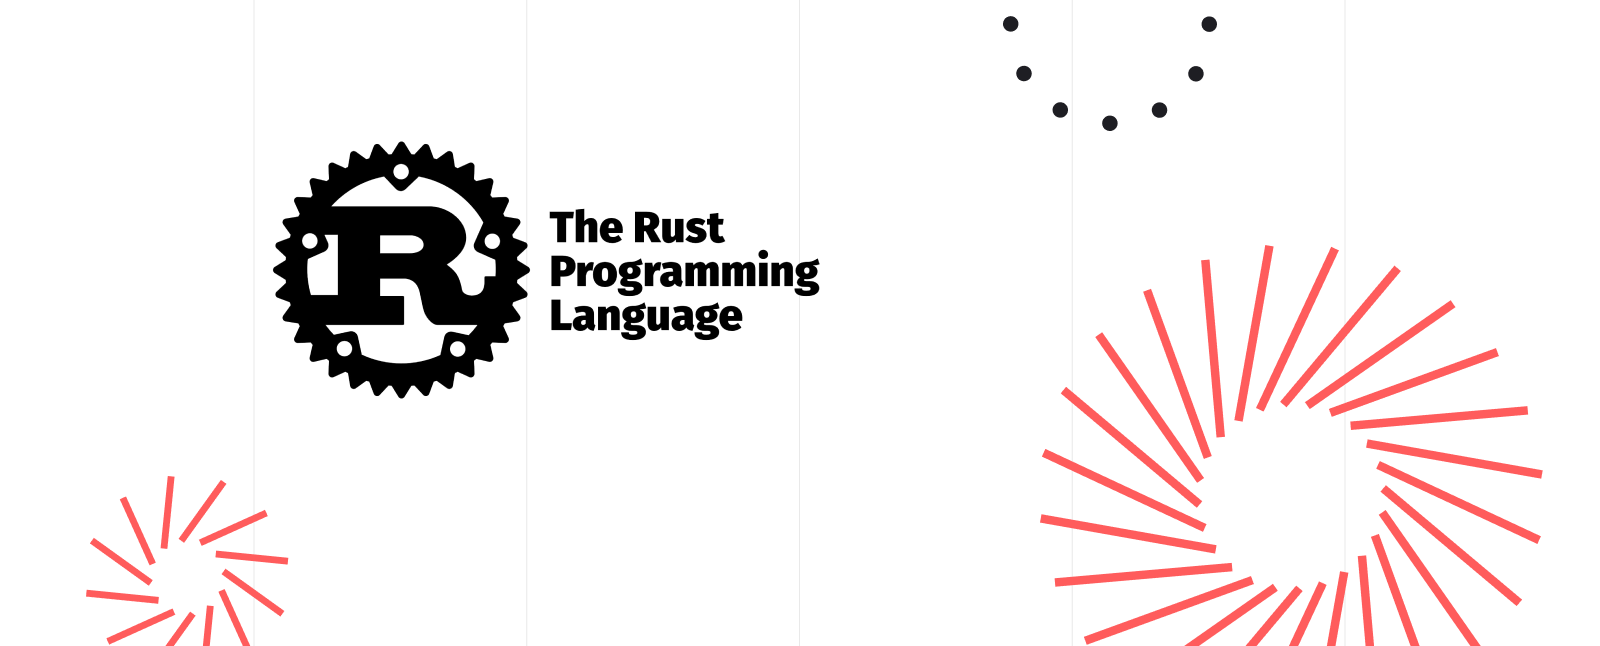 Rust as the best blockchain programming language